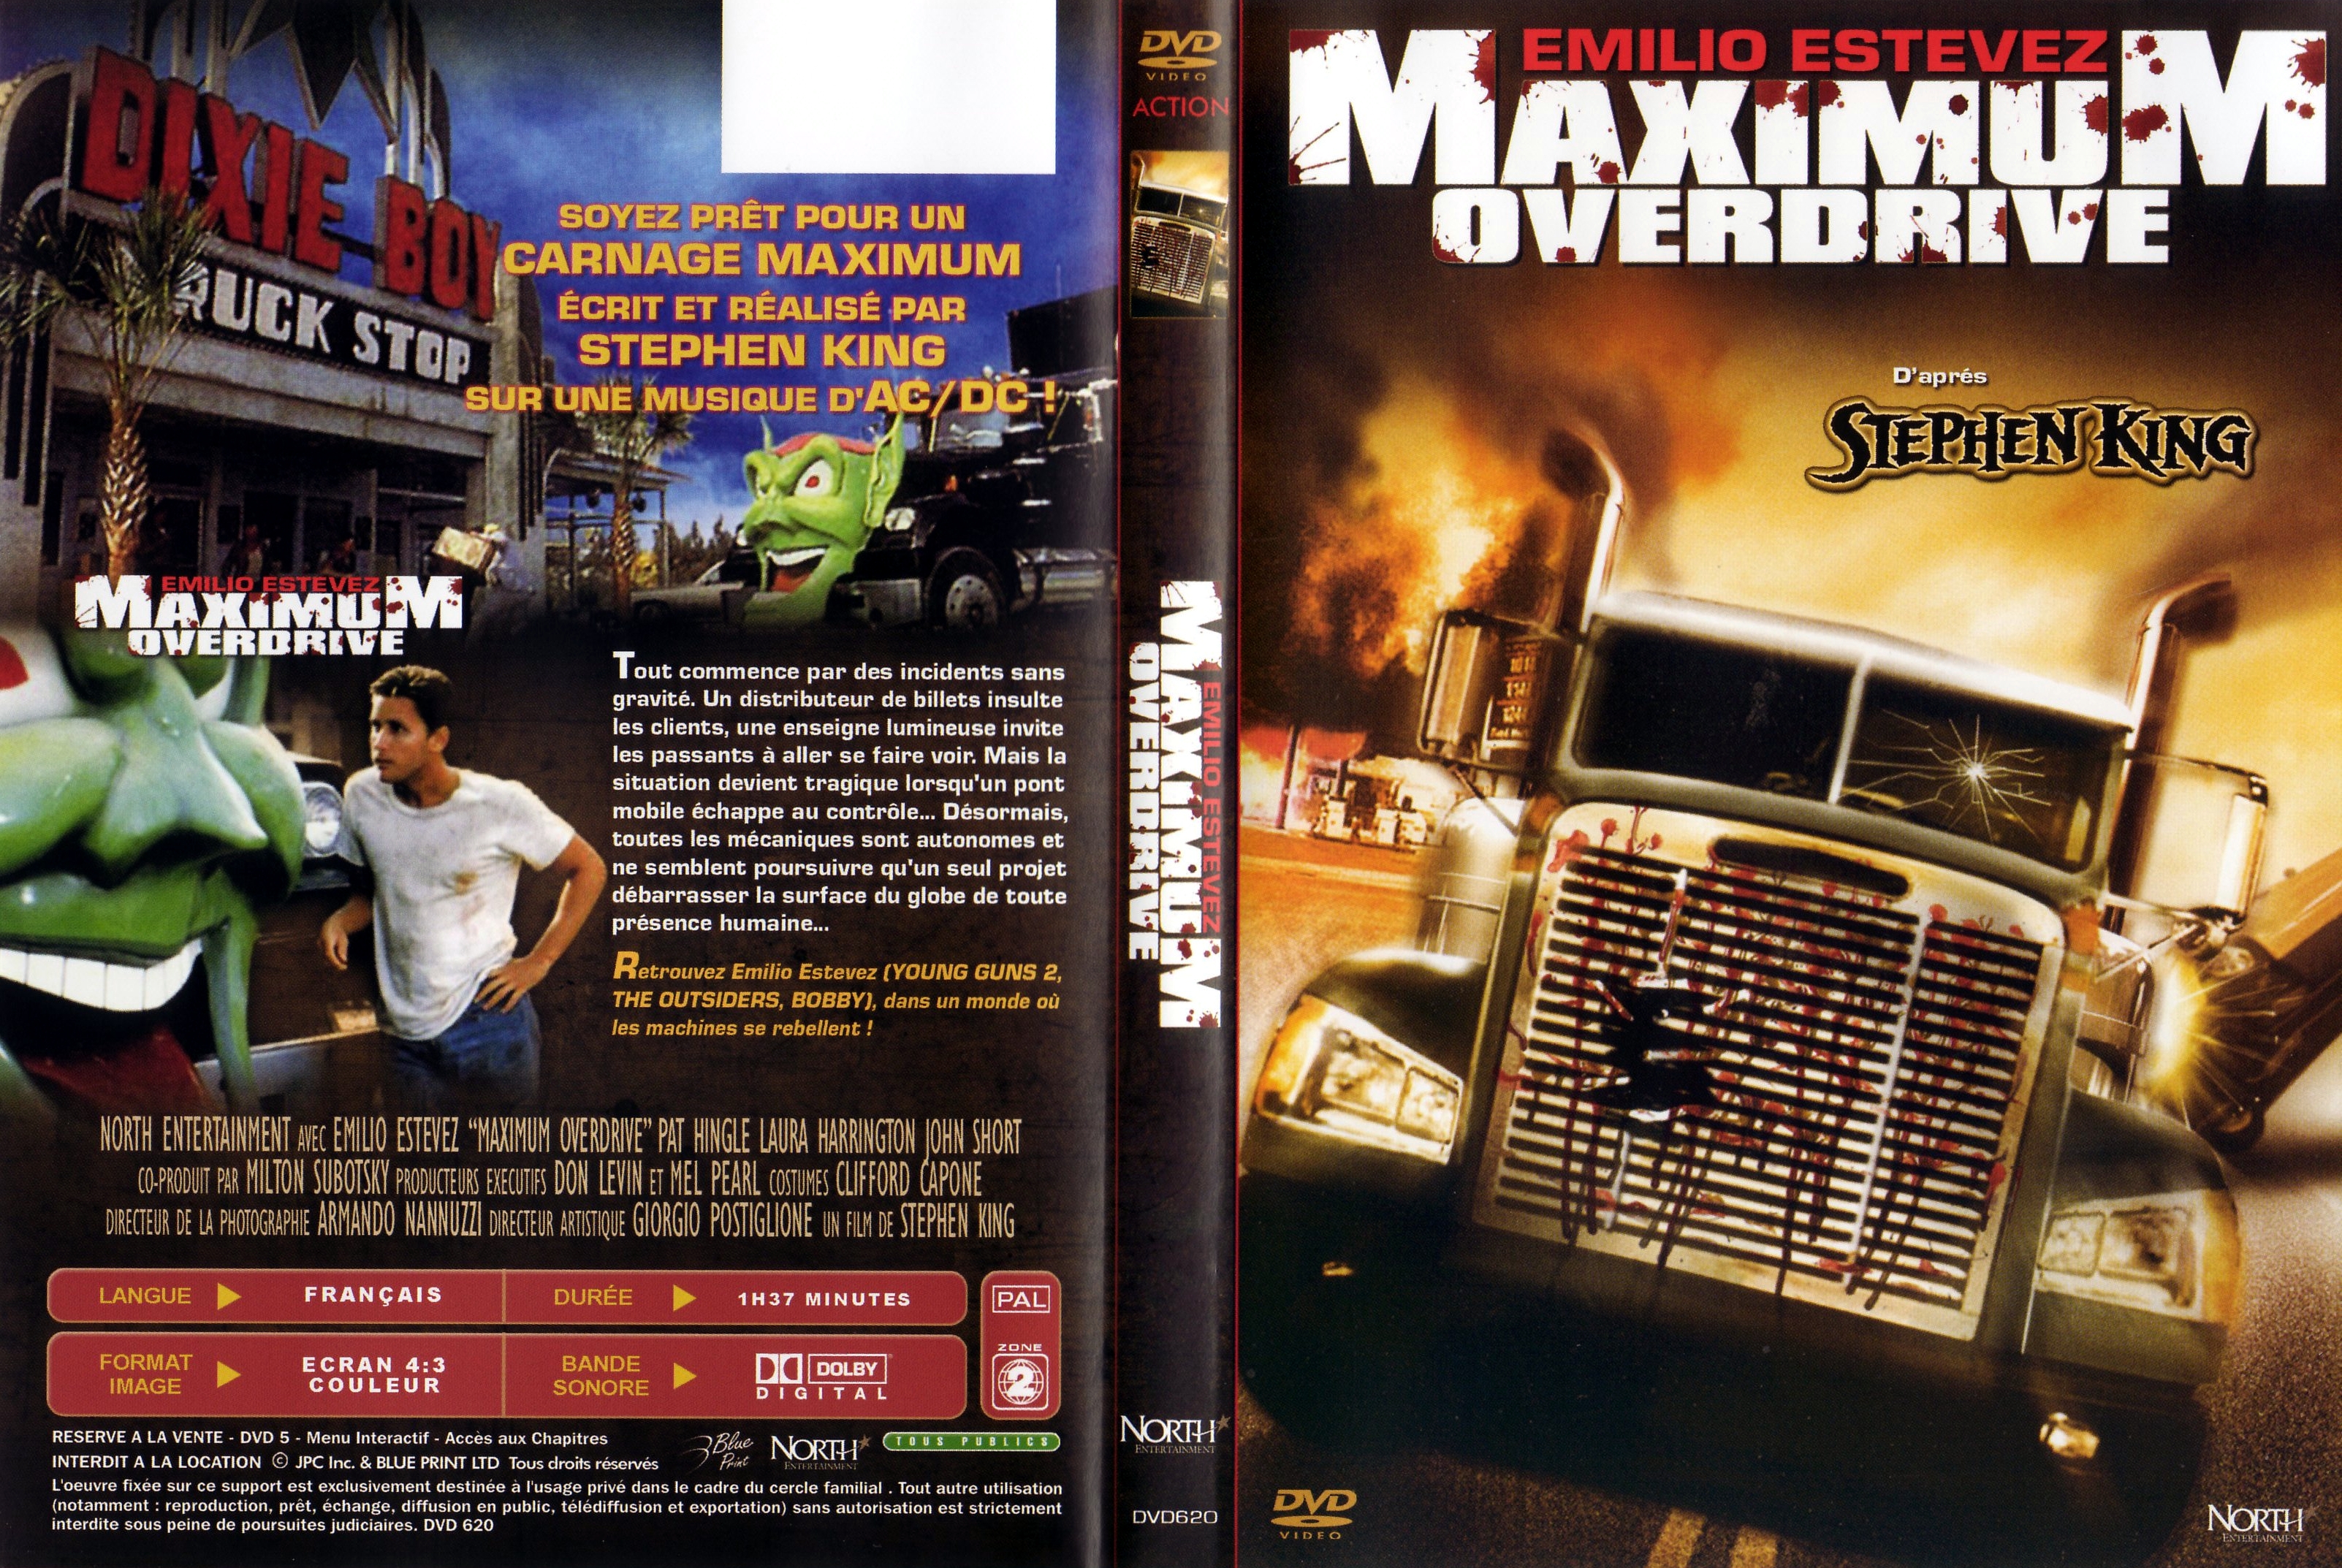 Jaquette DVD Maximum overdrive v3